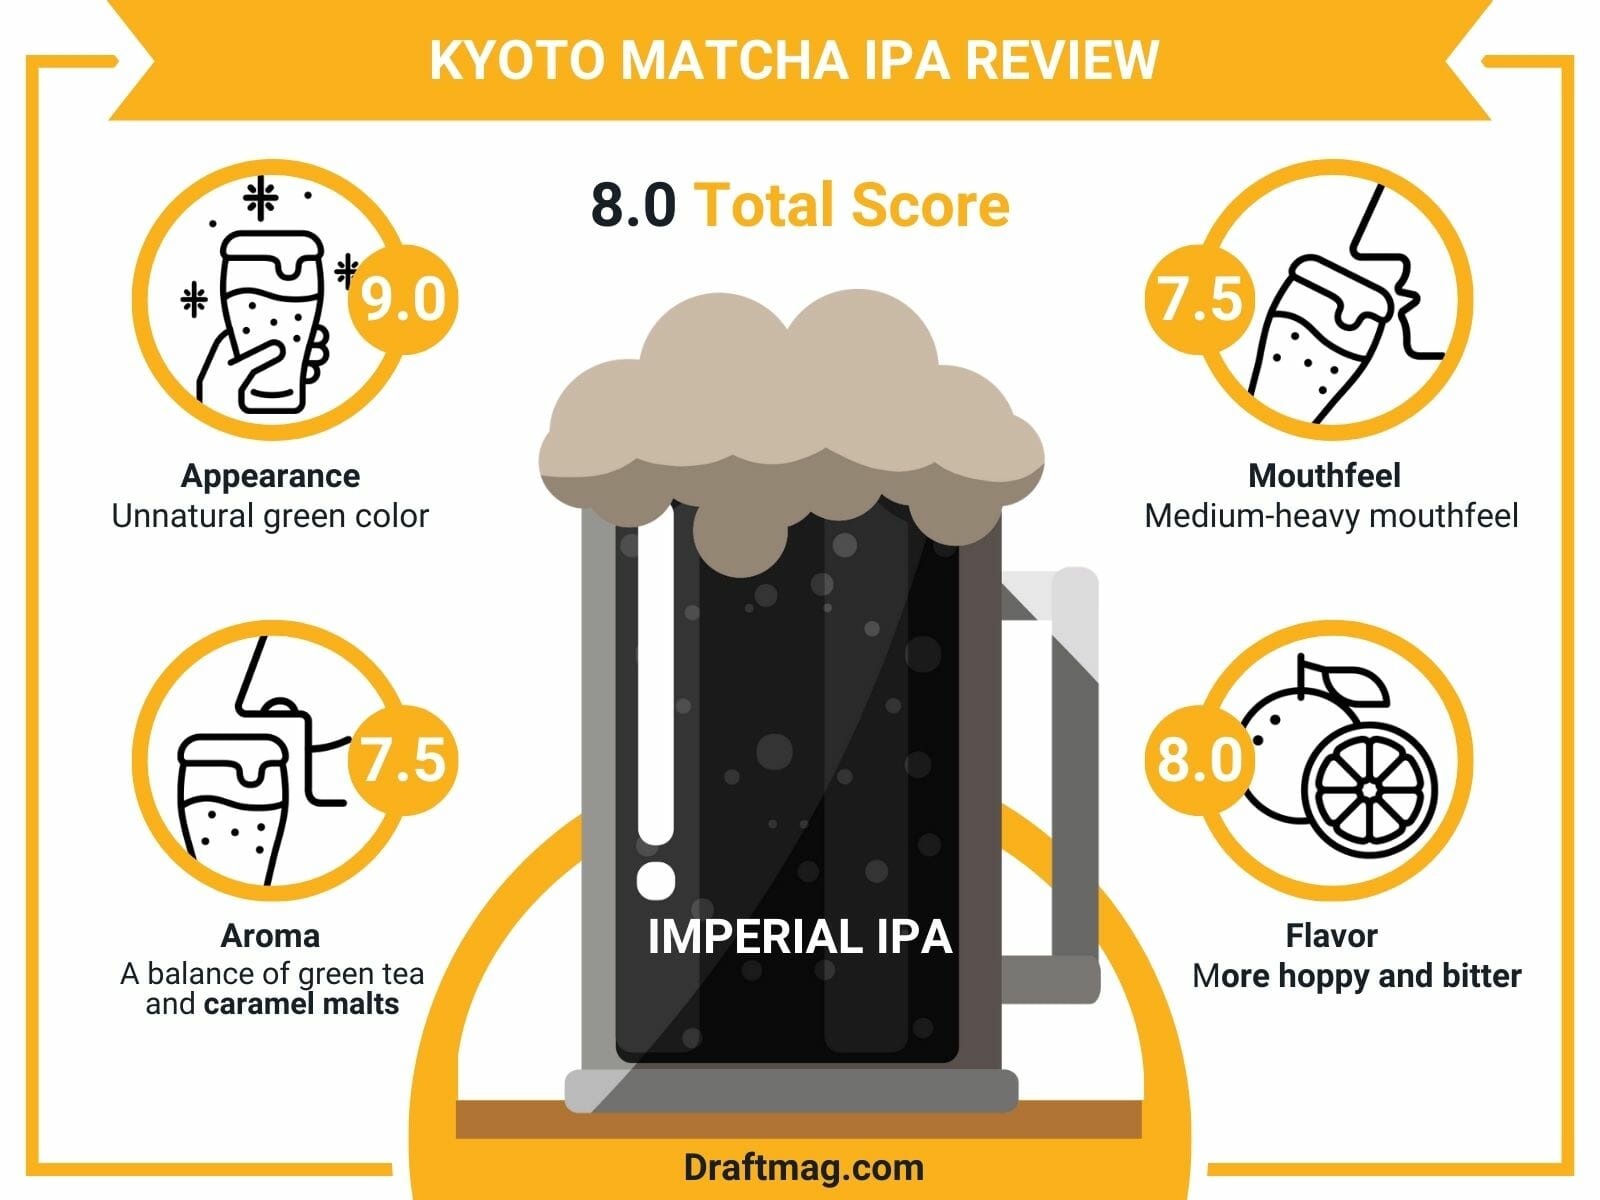 Kyoto Matcha IPA Review Infographic